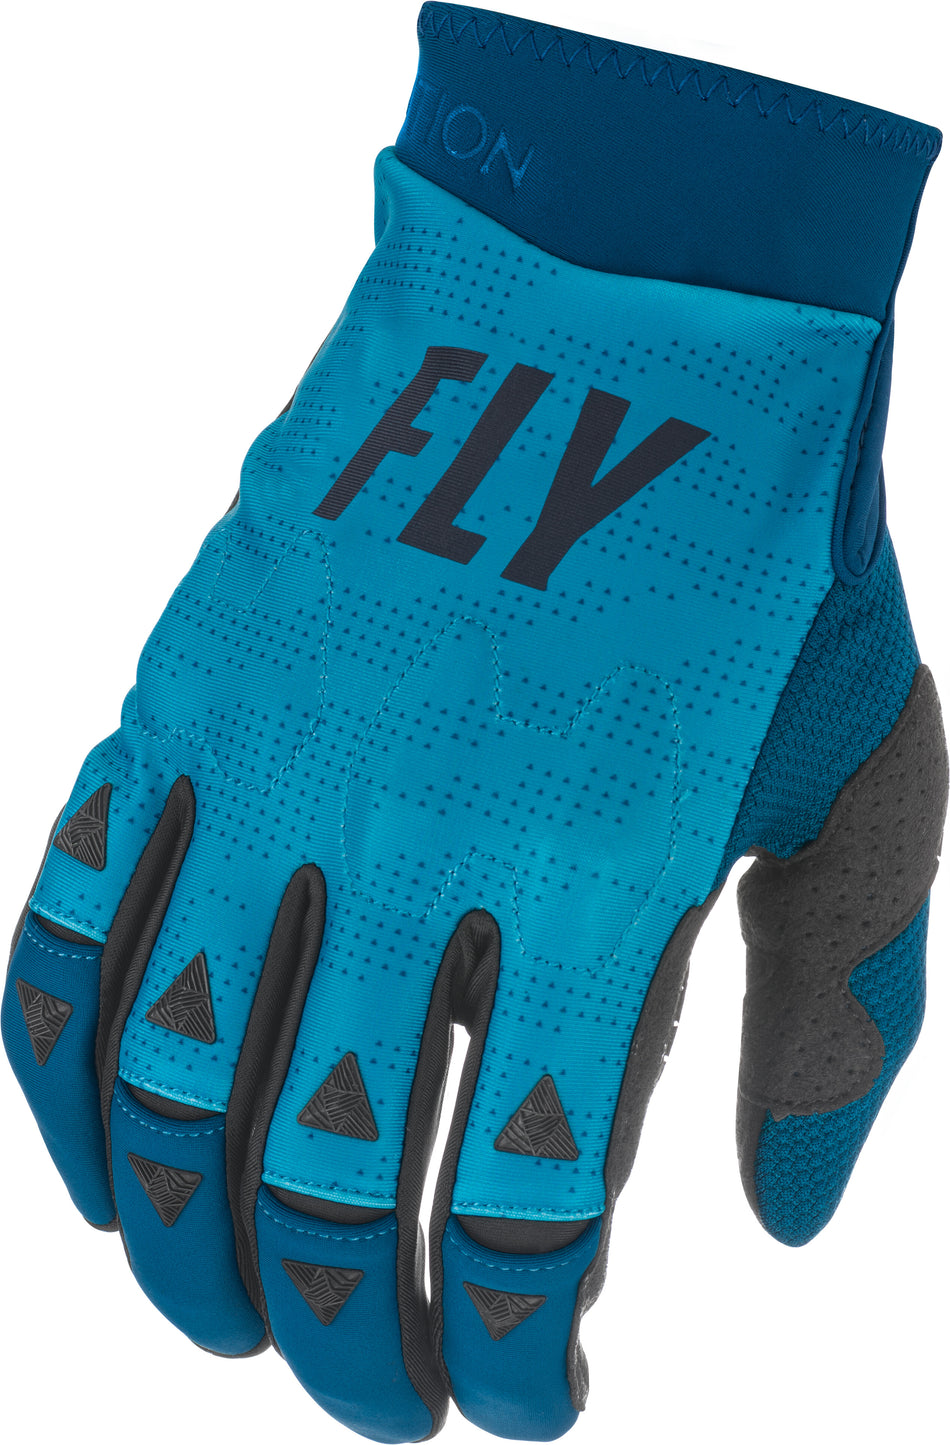 FLY RACING Evolution Dst Gloves Blue/Navy Sz 10 374-11110